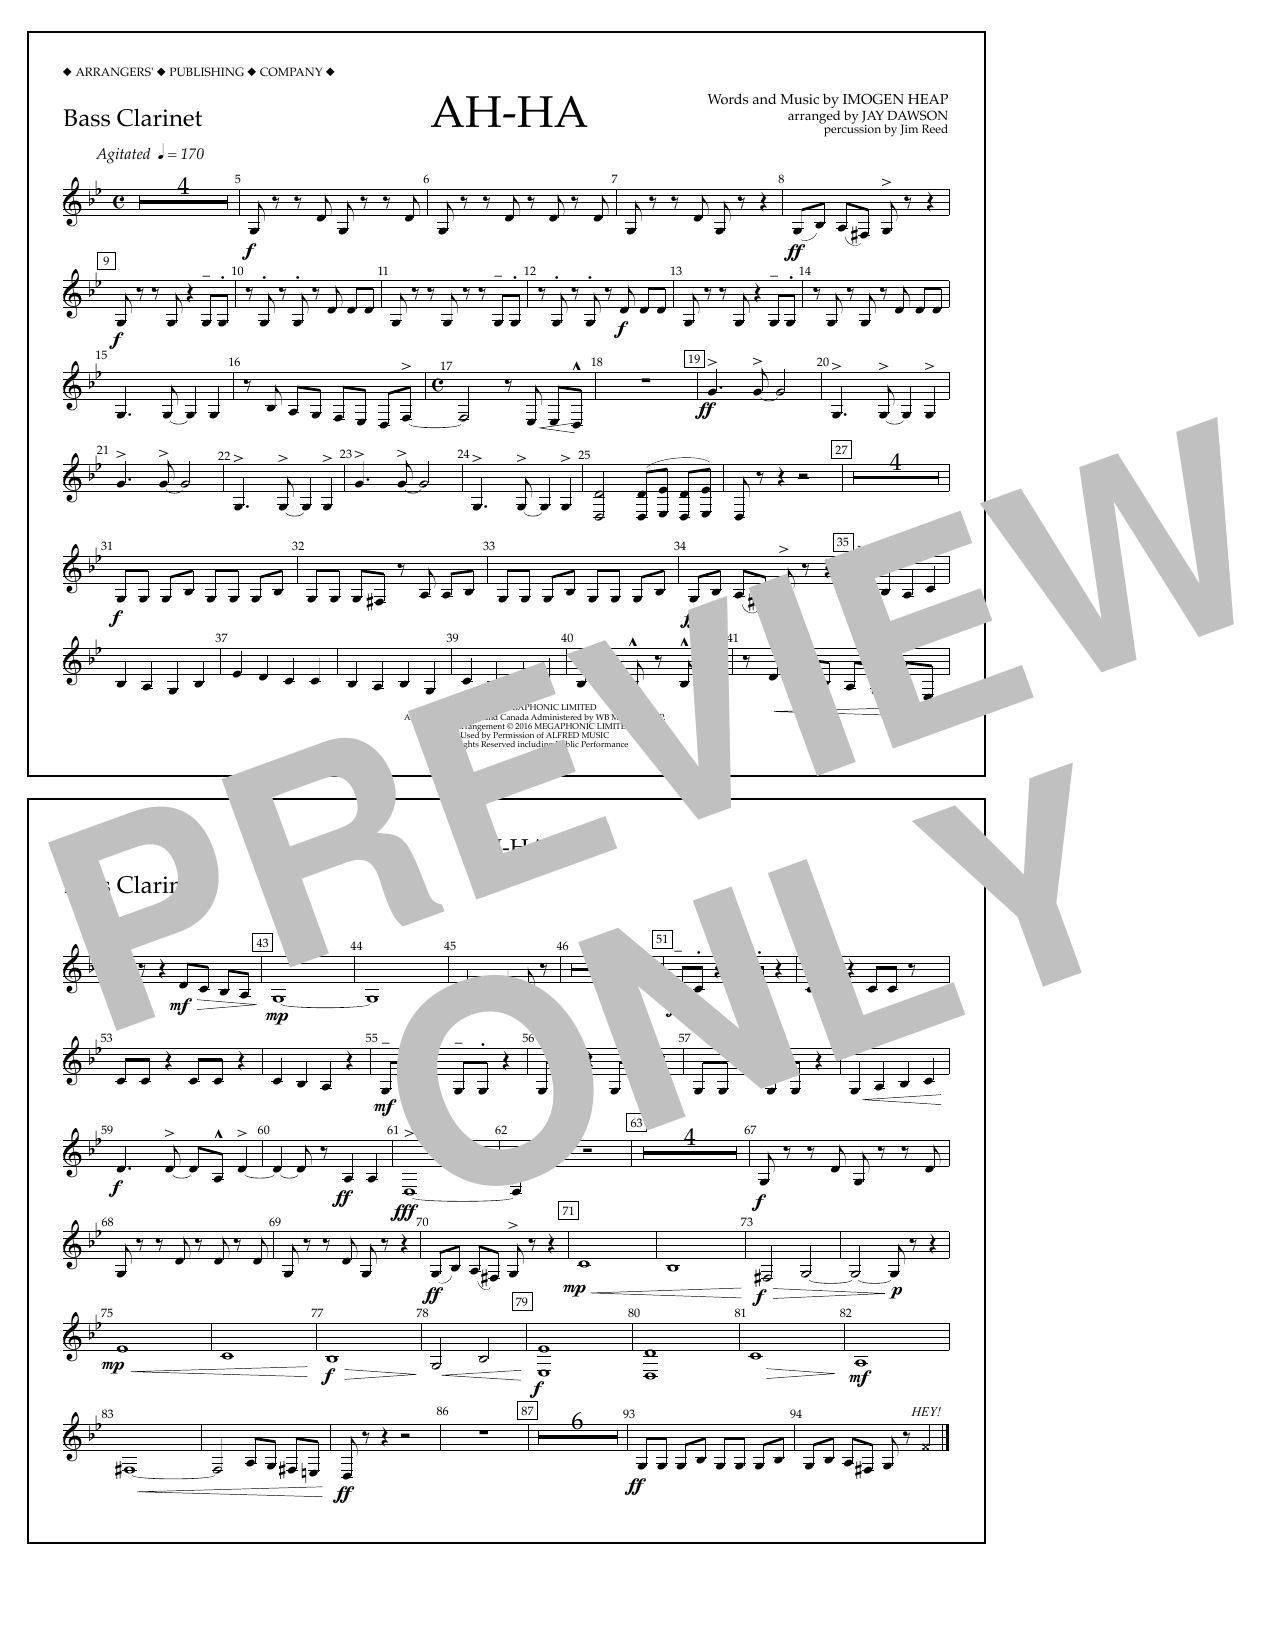 Jay Dawson Ah-ha - Bass Clarinet Sheet Music Notes & Chords for Marching Band - Download or Print PDF